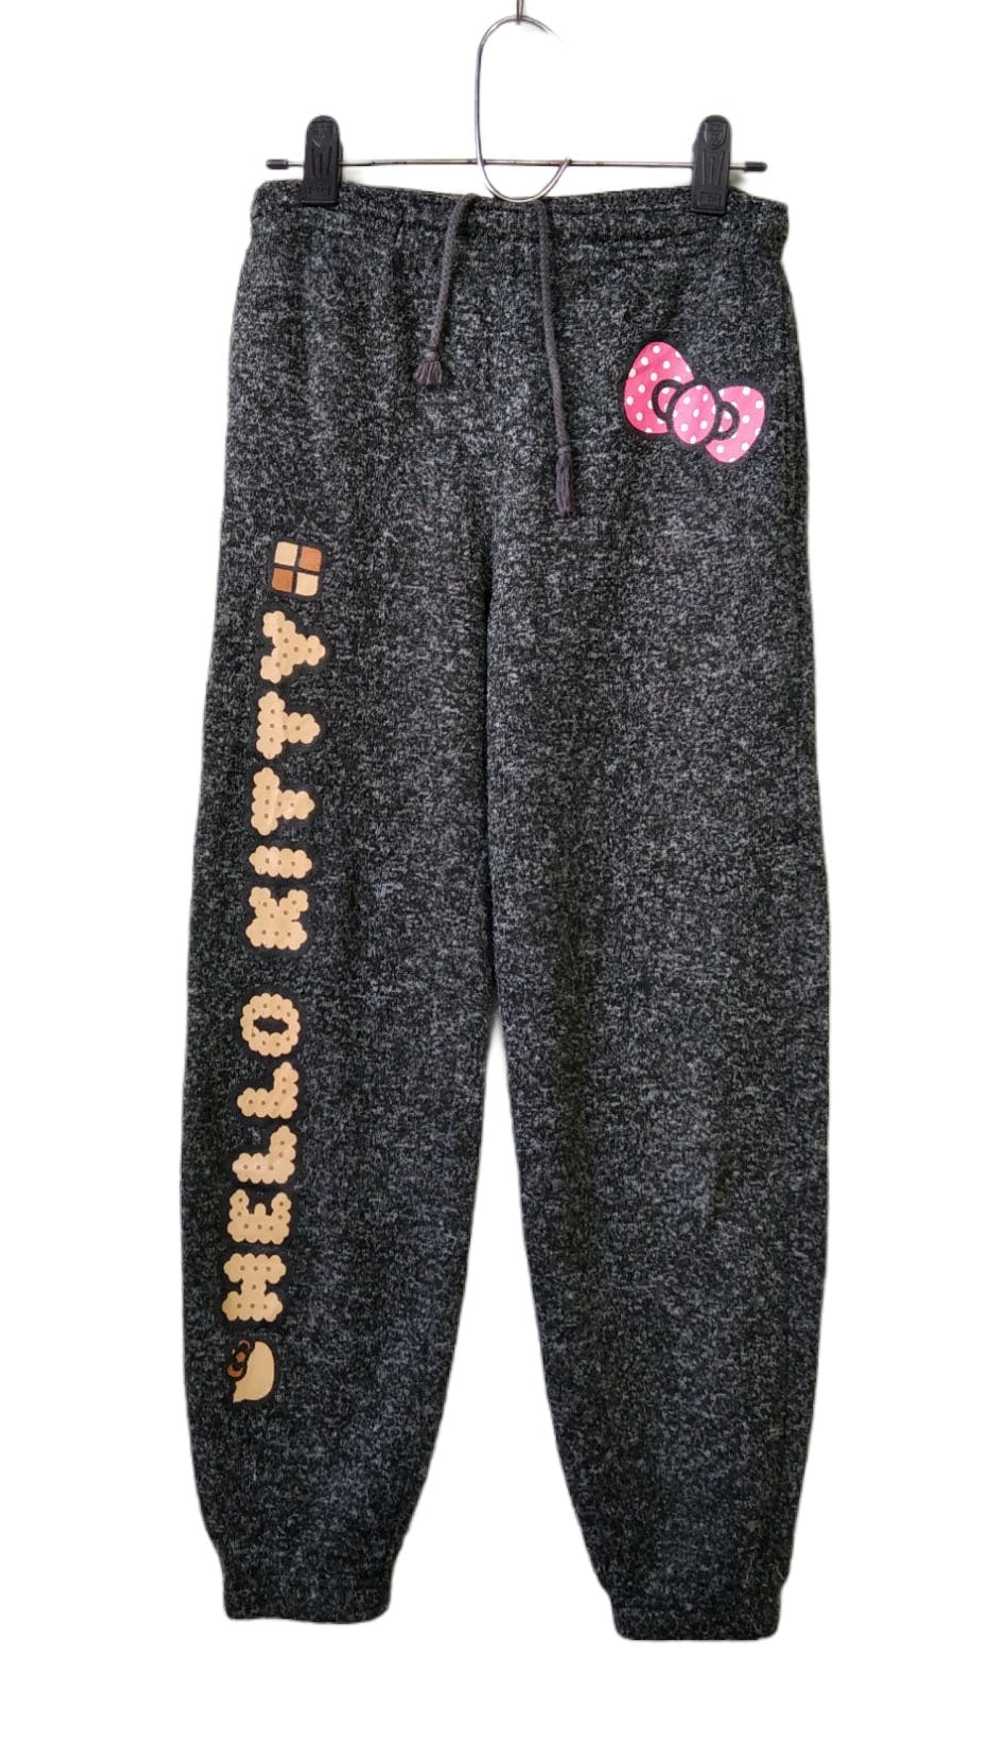 Japanese Brand - Very Nice!! Hello Kitty Fleece J… - image 1